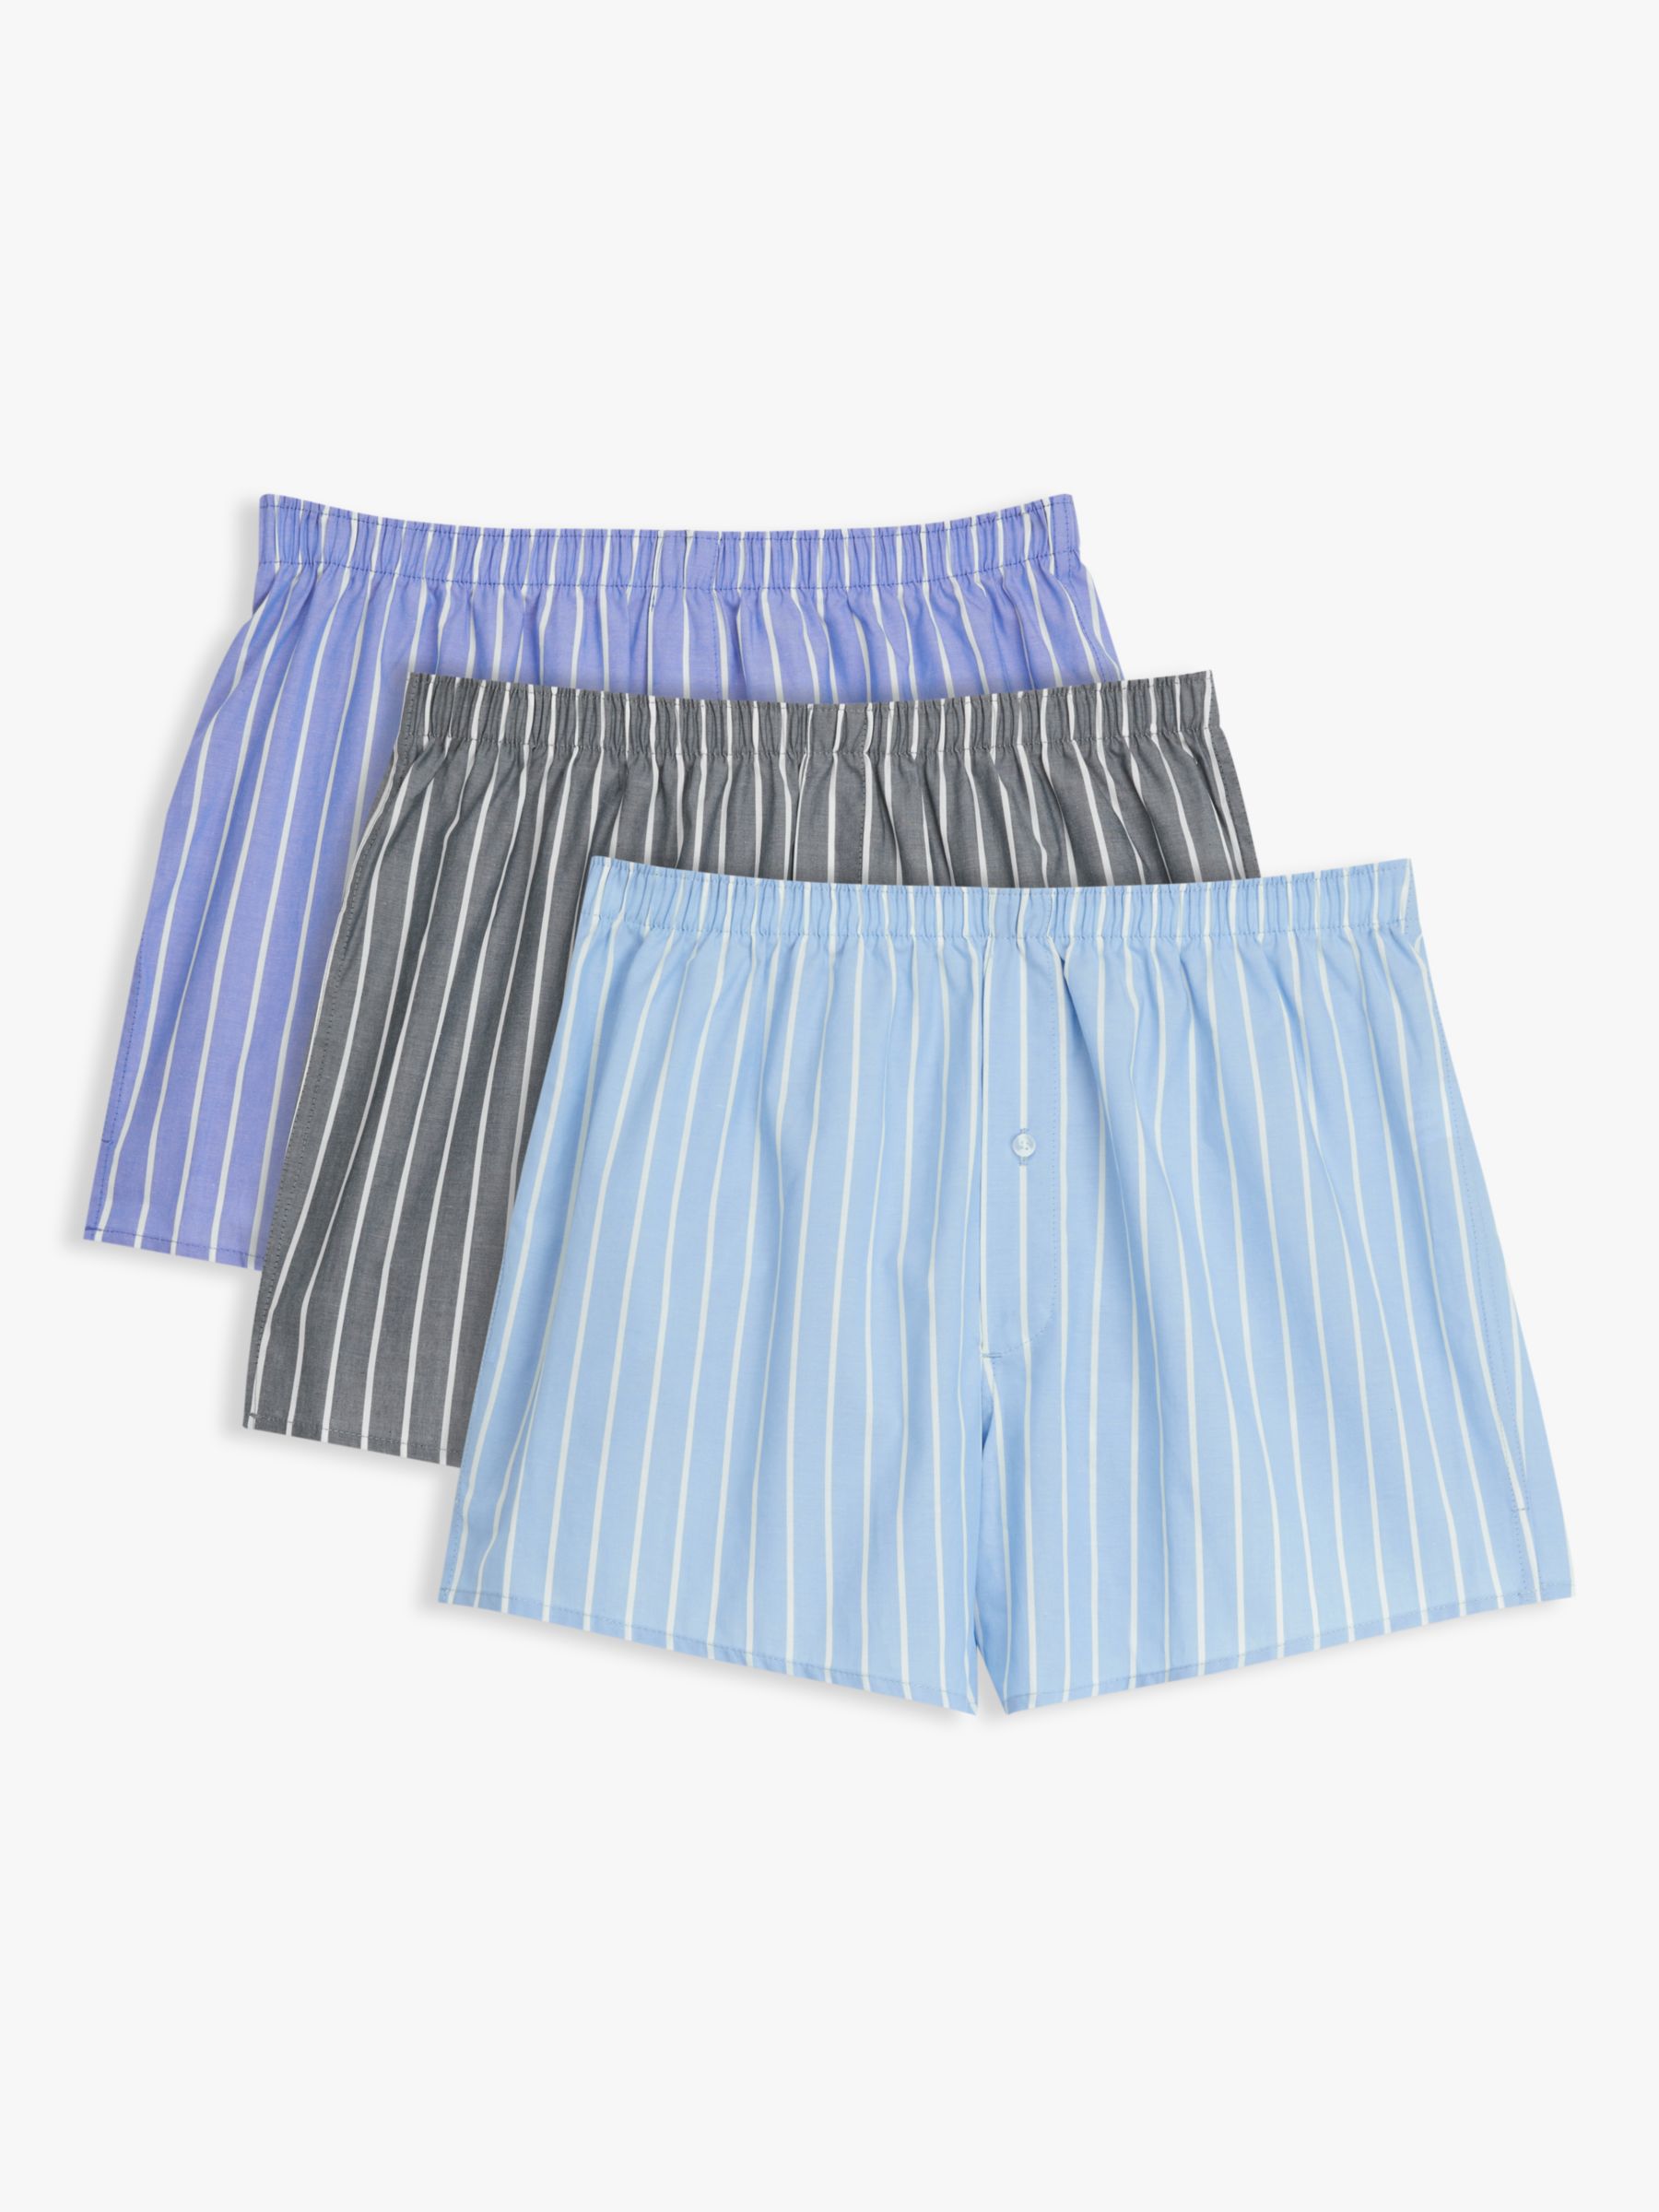 John Lewis Organic Cotton Stripe Boxers, Pack of 3, Blue, S